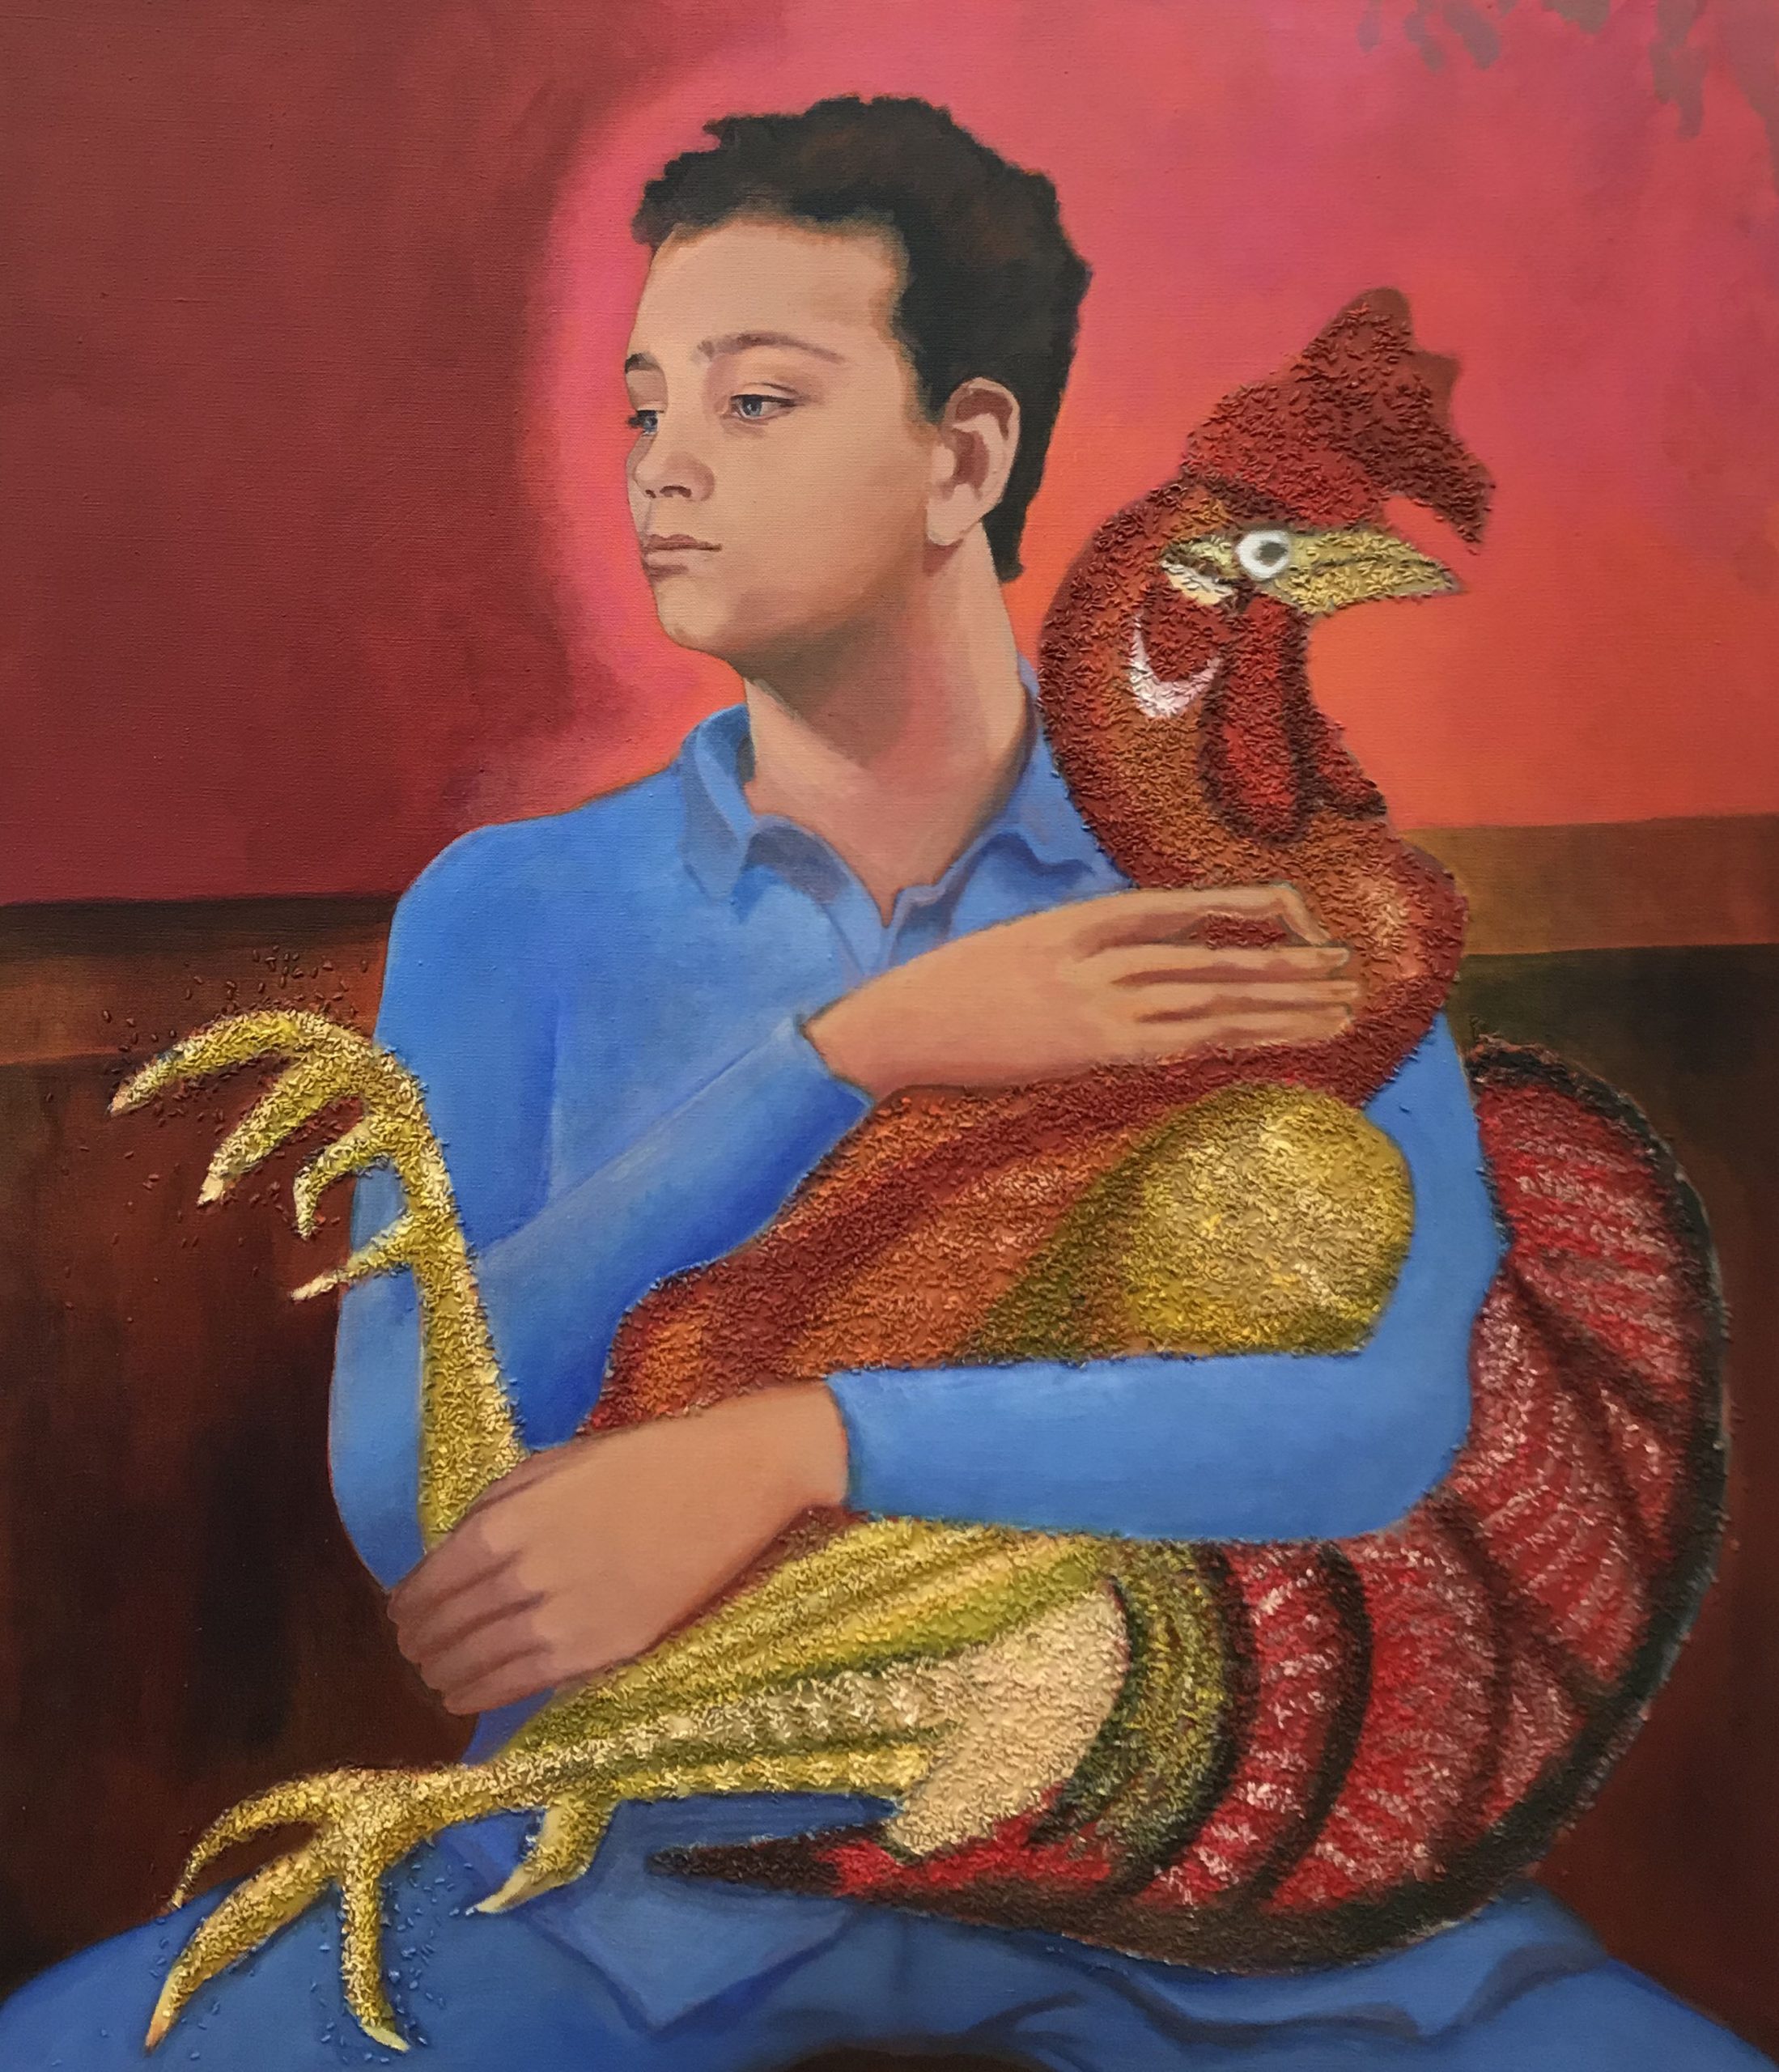 Allison Katz, Boy with Cock, 2019